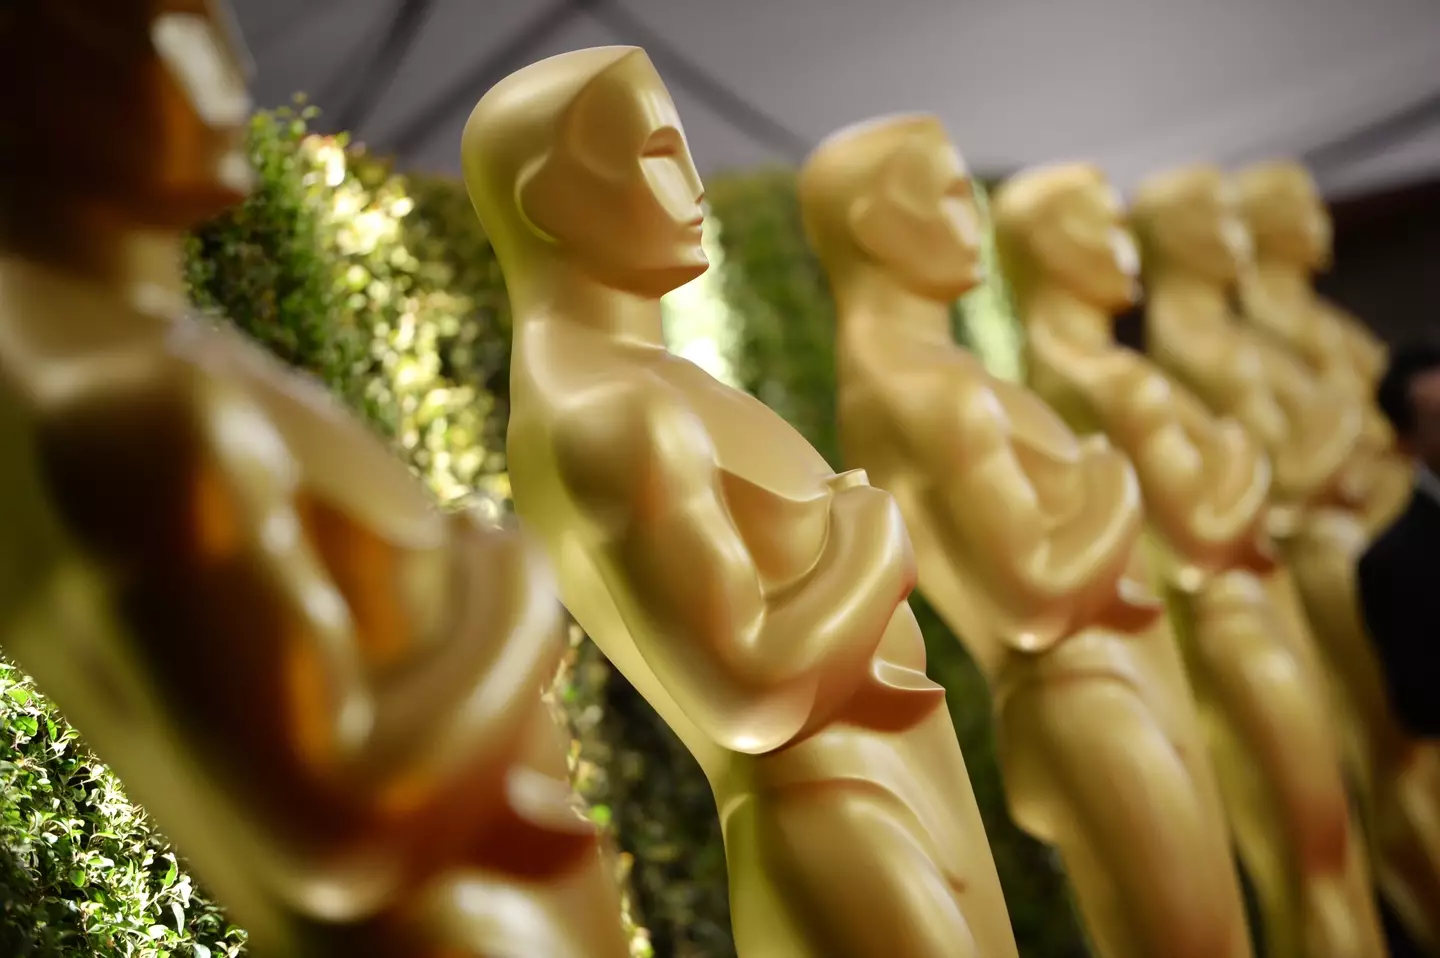 Giant Oscars statues. Terrifying.